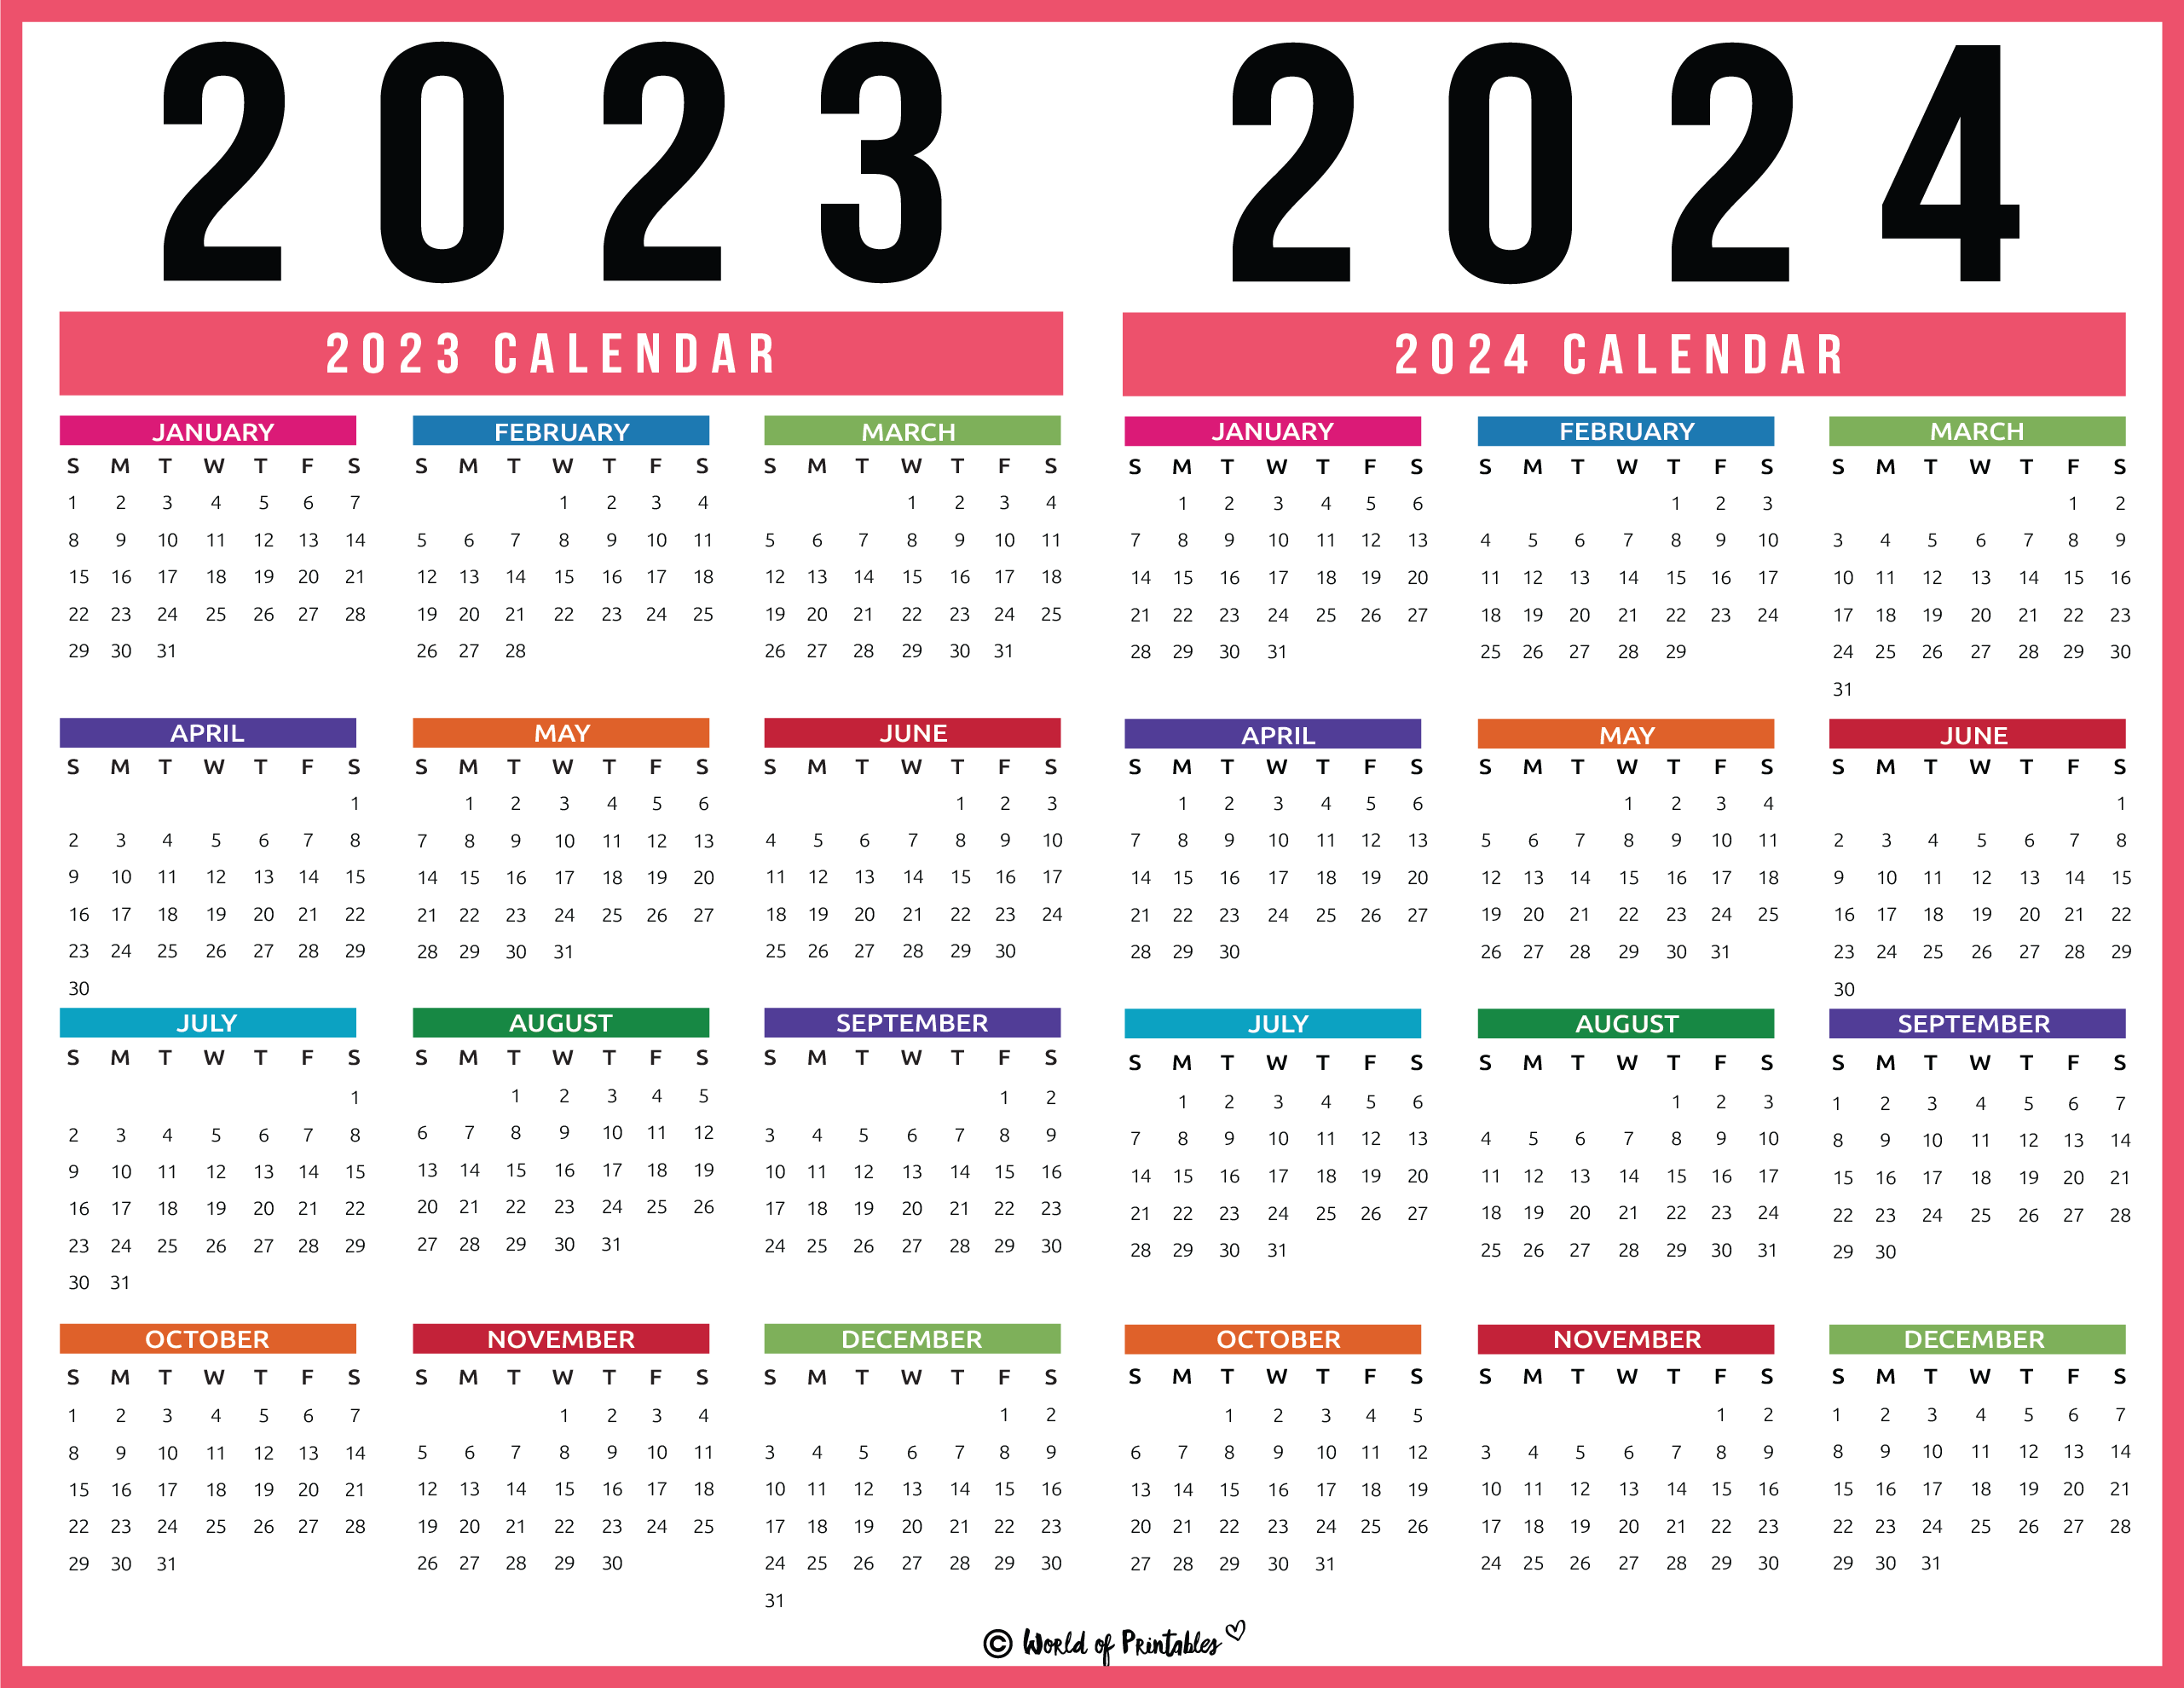 2023 2024 Calendar Free Printables - World Of Printables for Printable Yearly Calendar 2023 And 2024